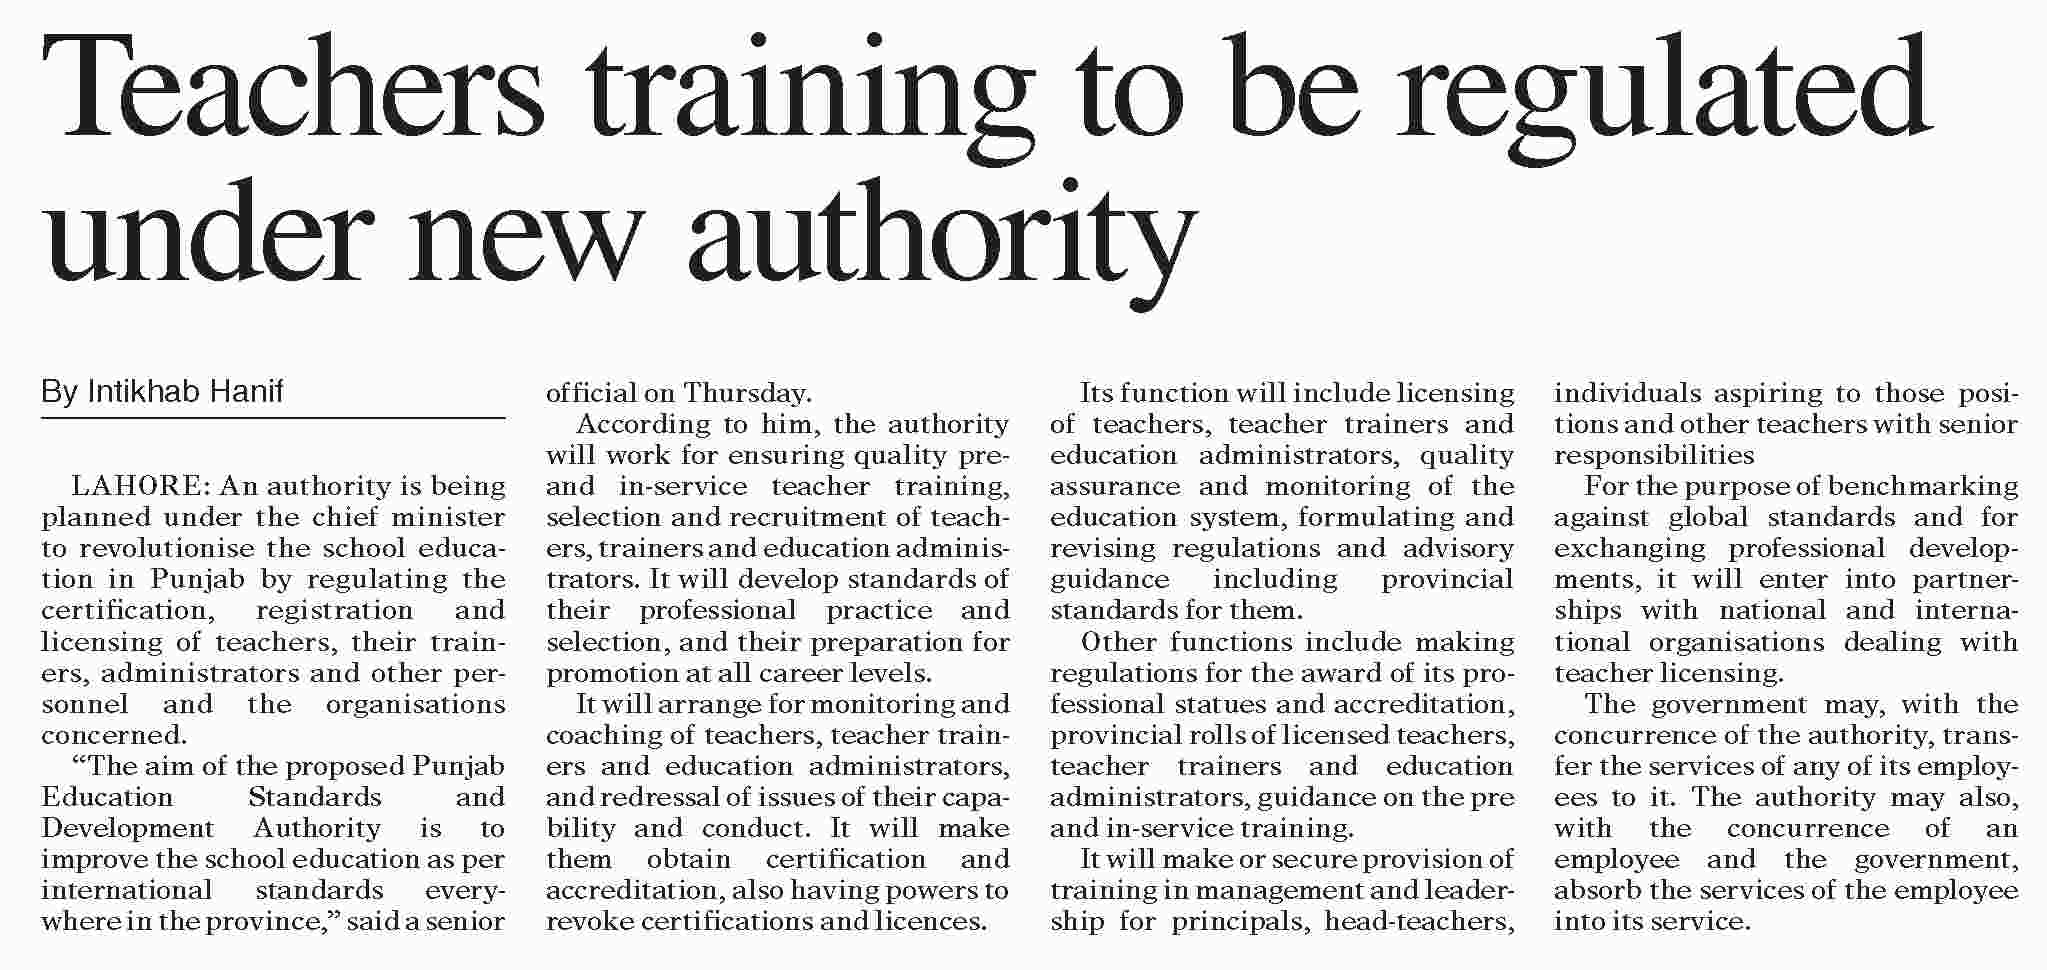 Teachers Training to be Regulated under New Authority